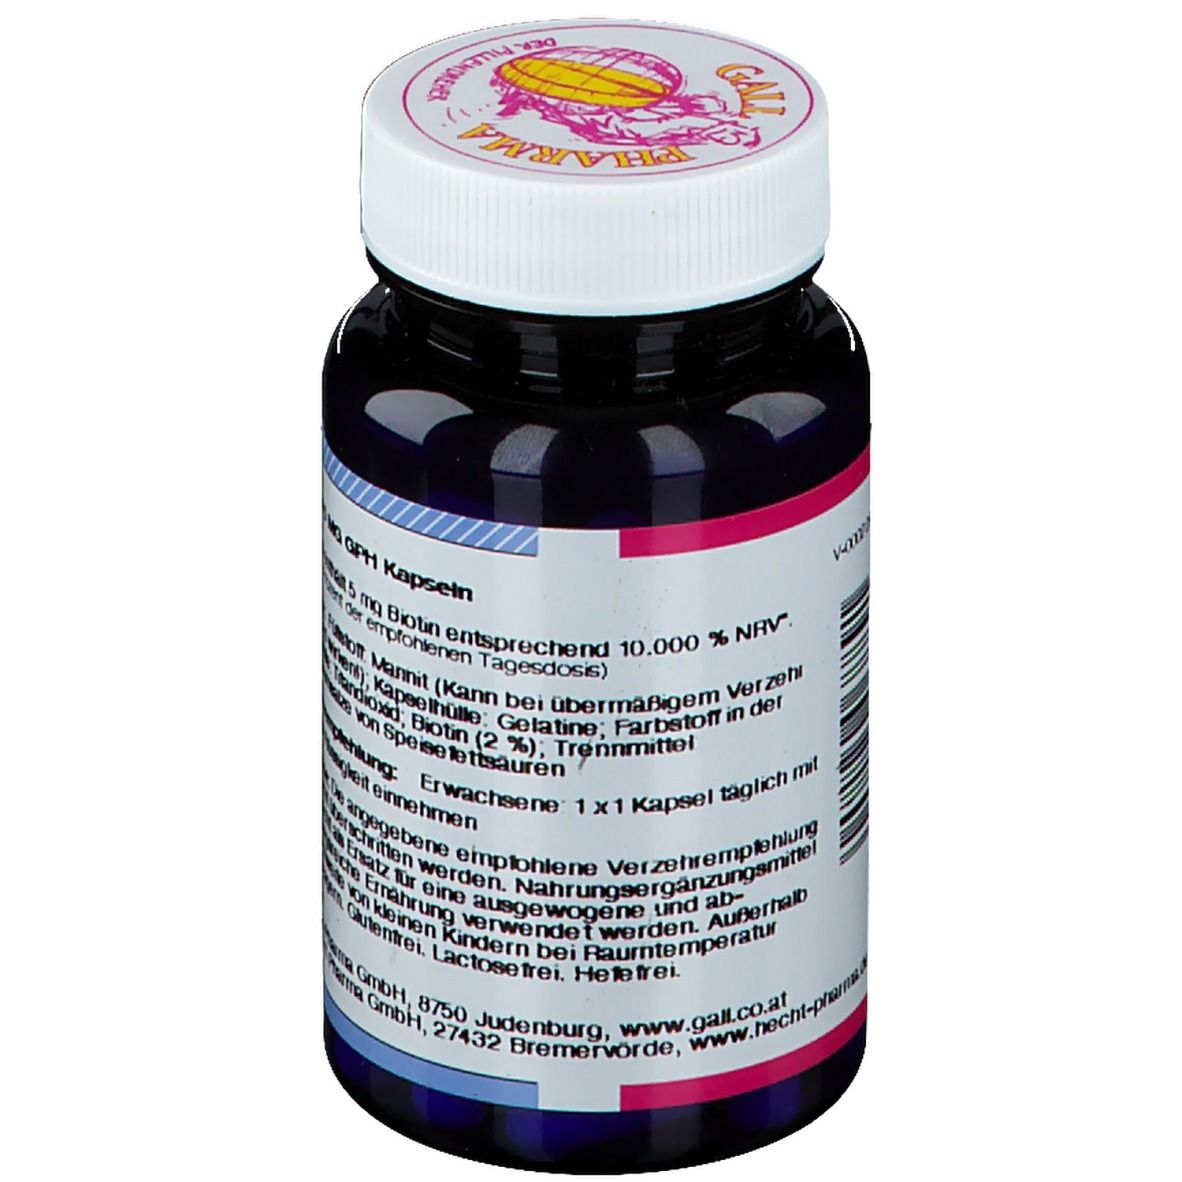 Hecht Biotin 5 mg GPH